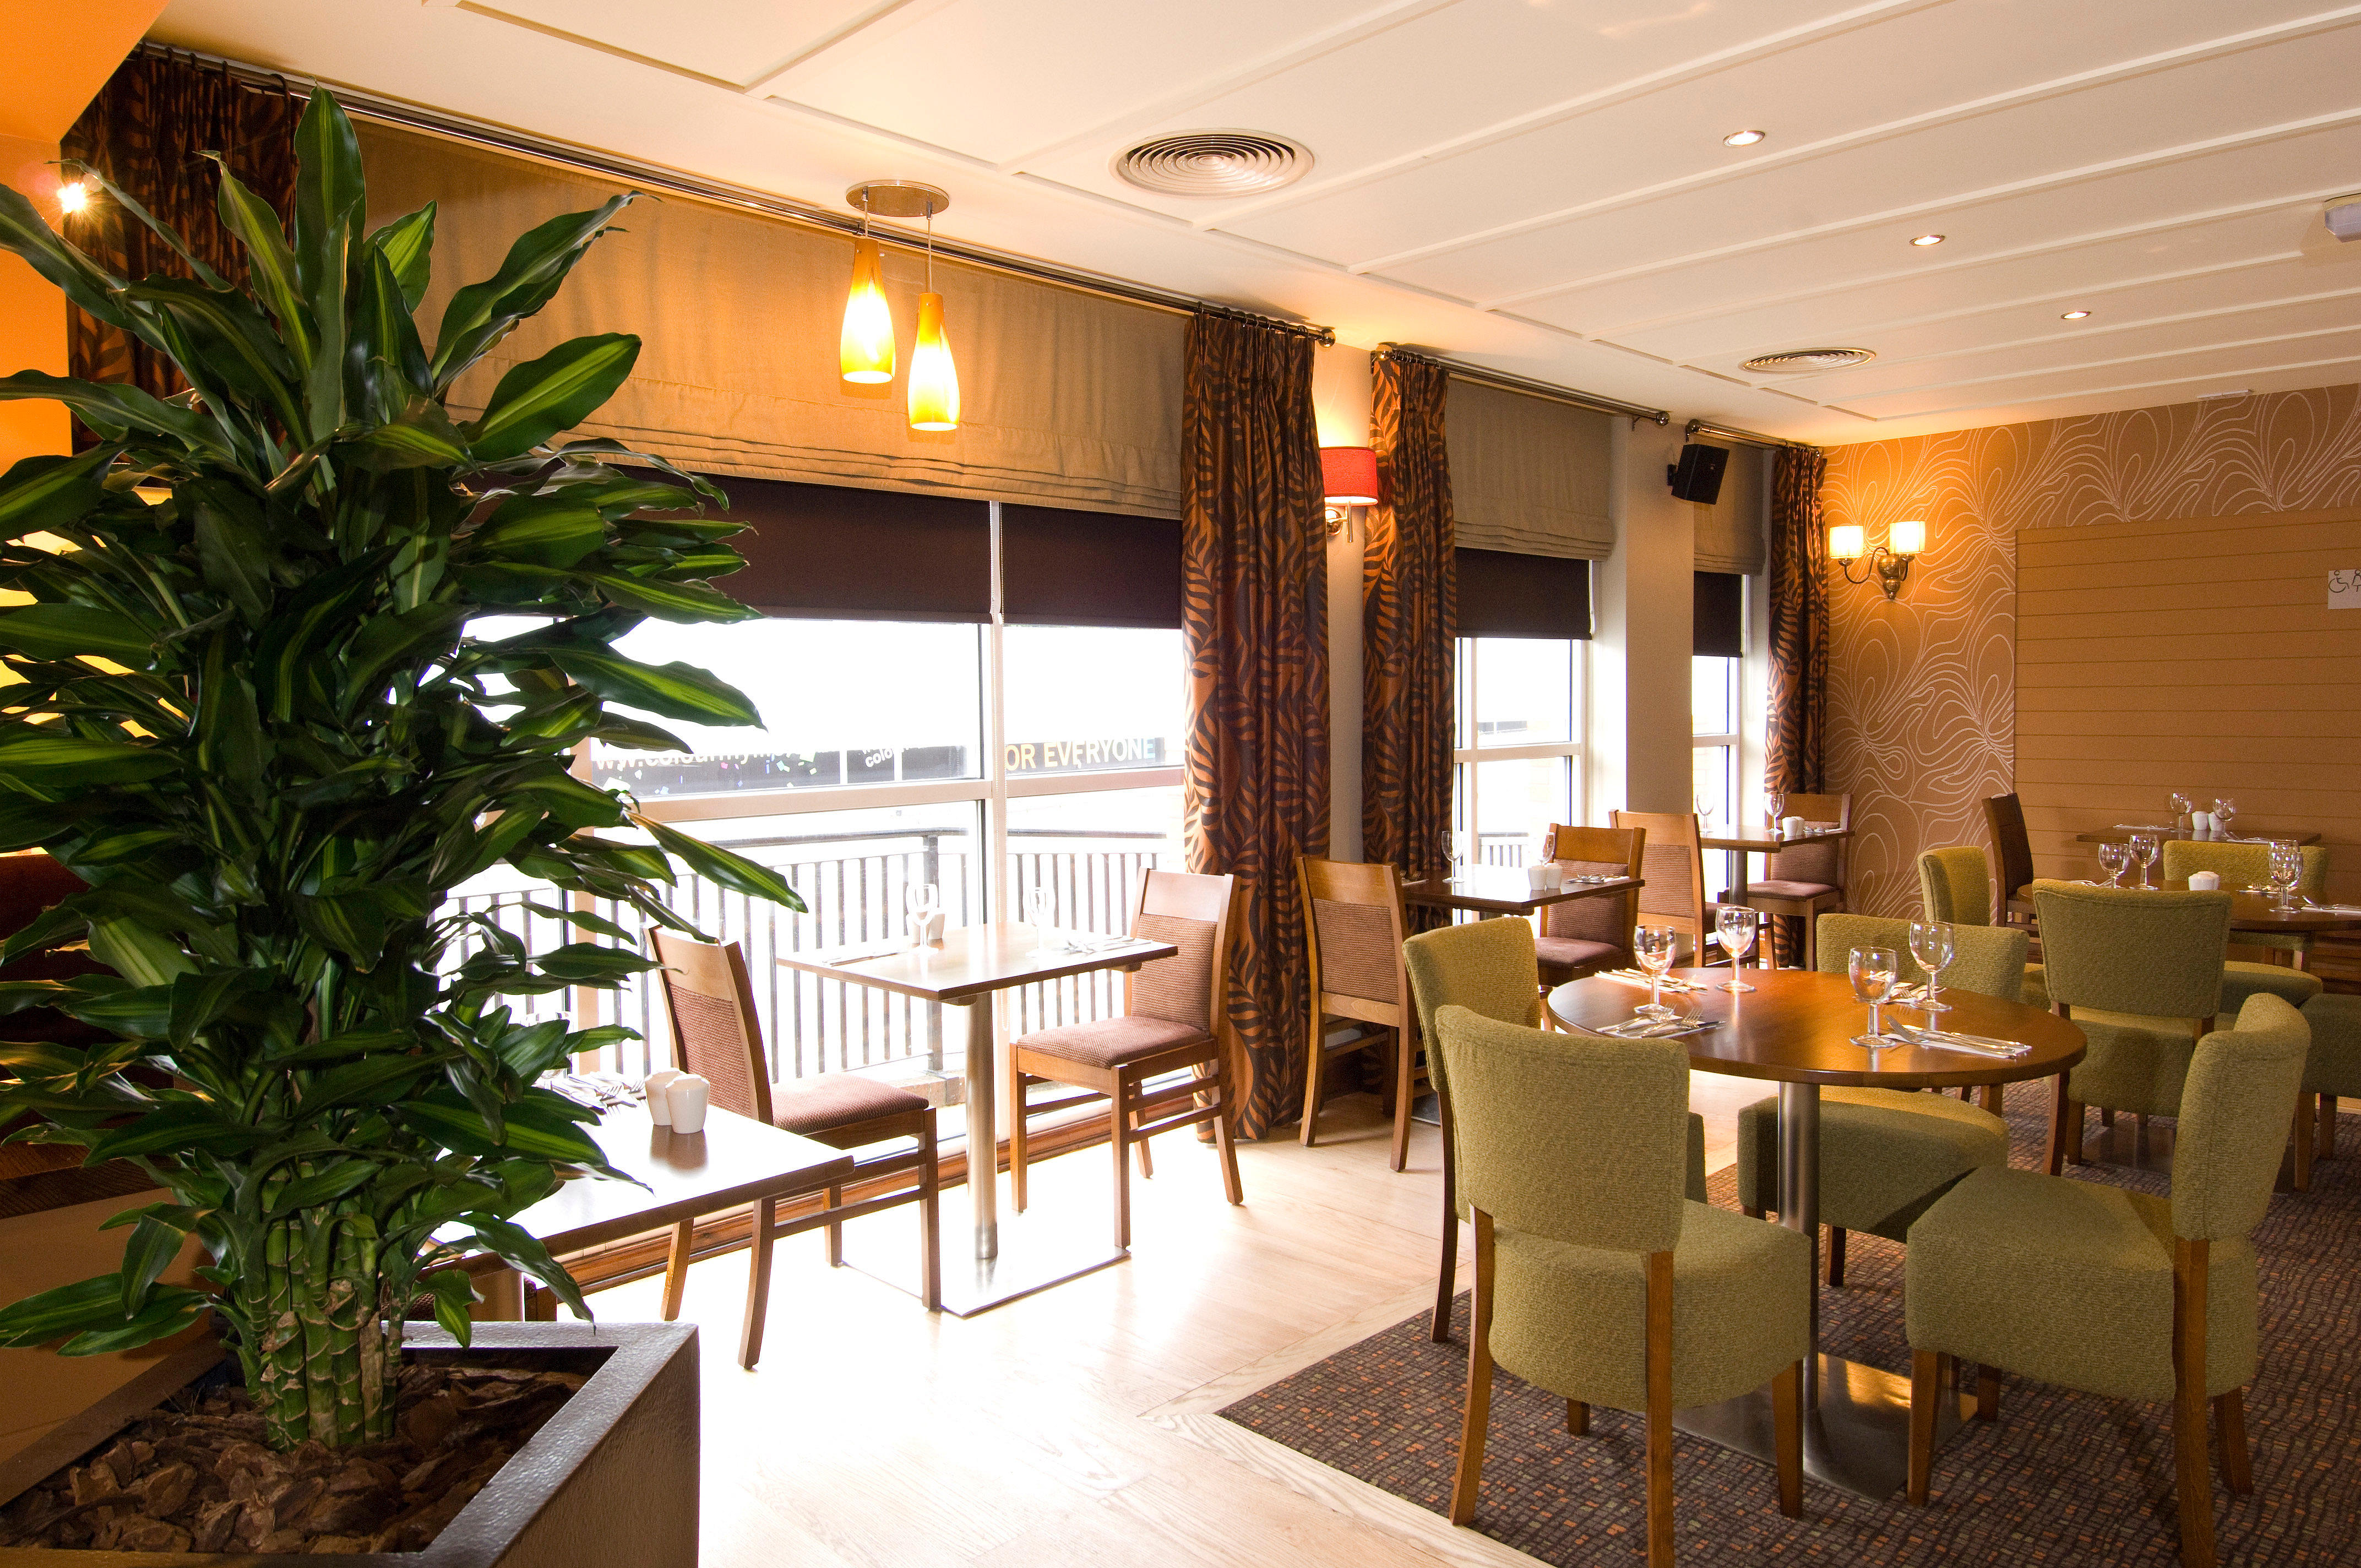 Thyme restaurant Premier Inn Manchester City Centre (Deansgate Locks) hotel Manchester 08715 278740